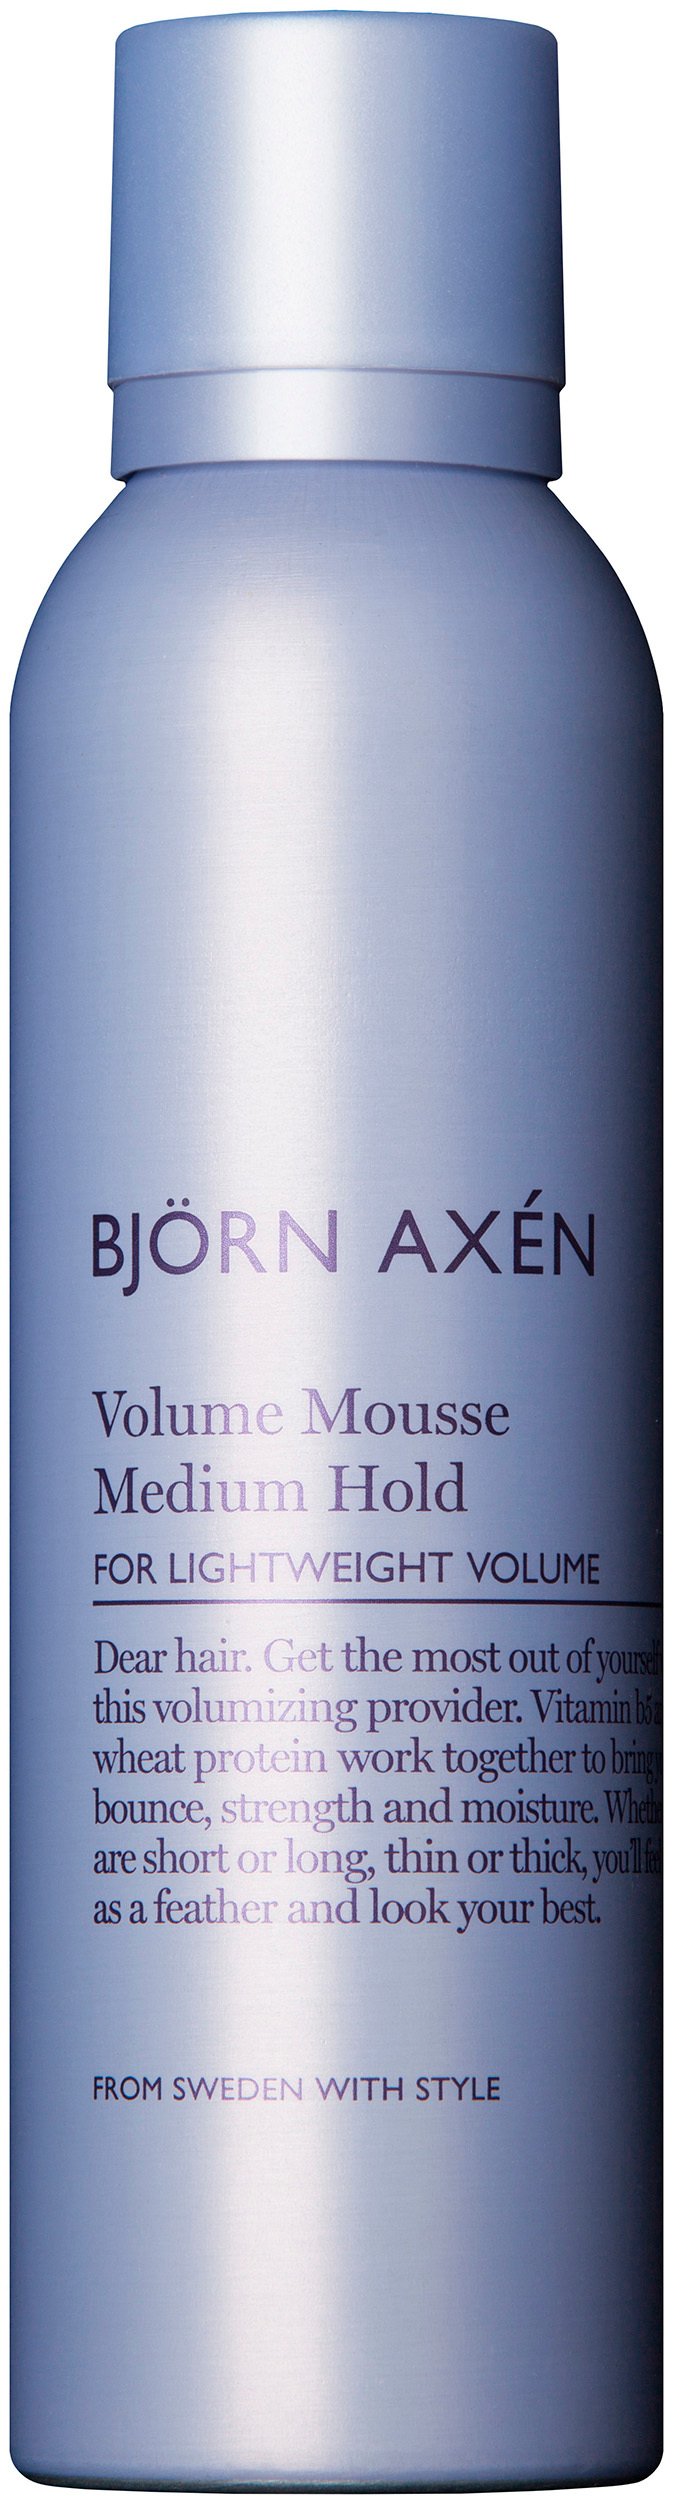 Björn Axén Volume Mousse Medium Hold 200 ml